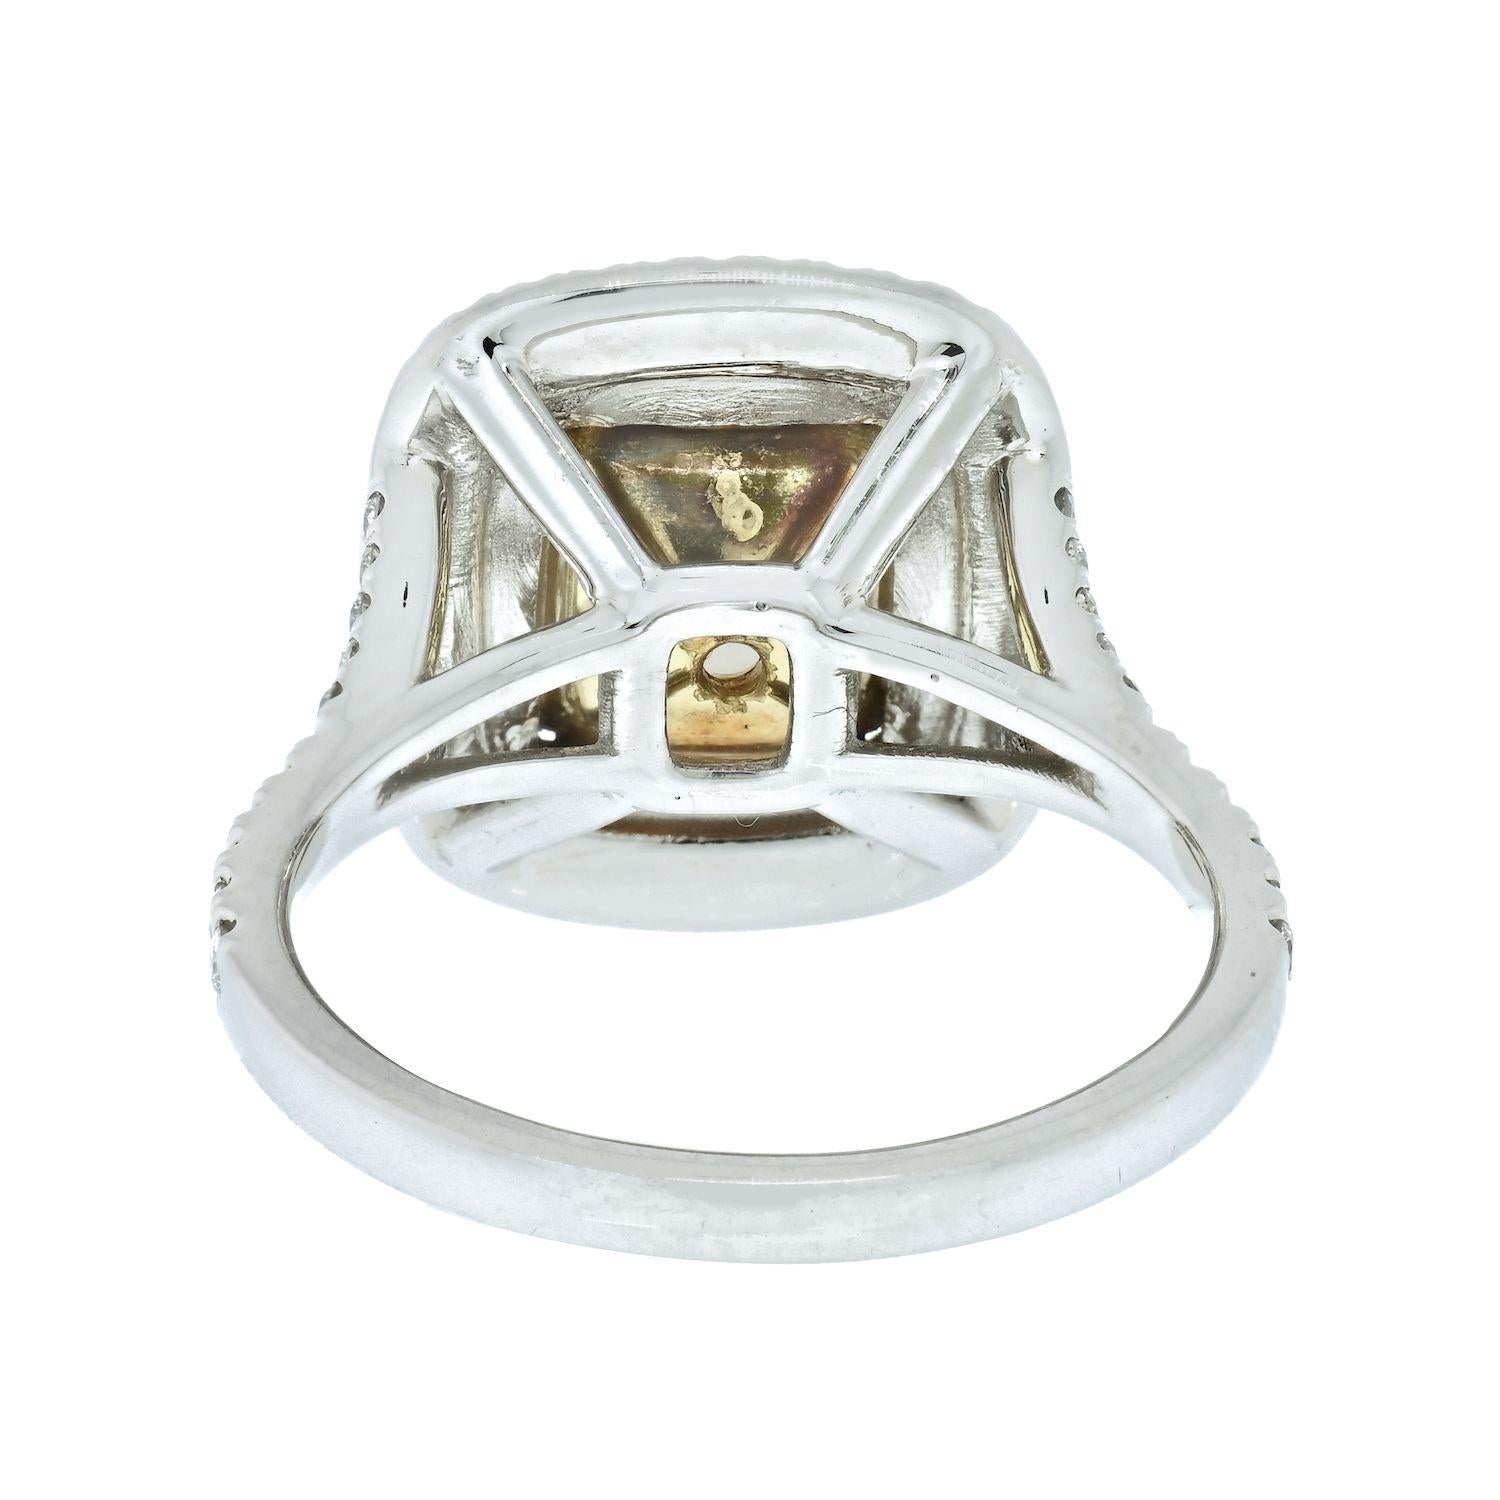 2 carat cushion cut halo engagement rings price